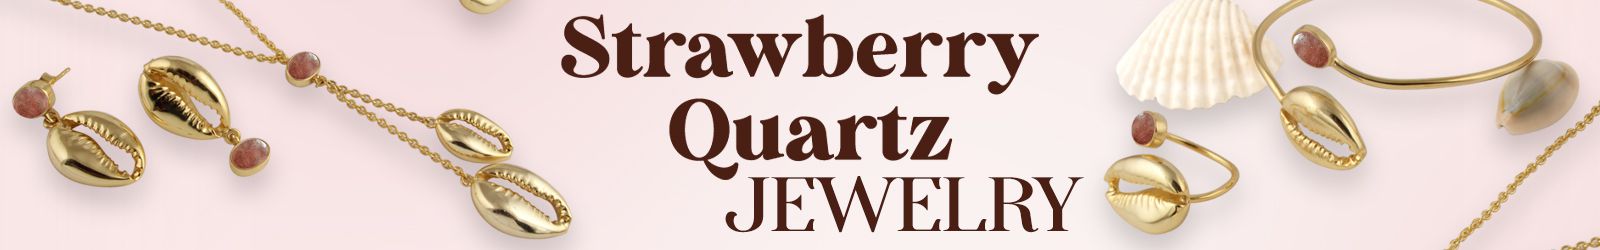 Wholesale Strawberry Quartz Jewelry